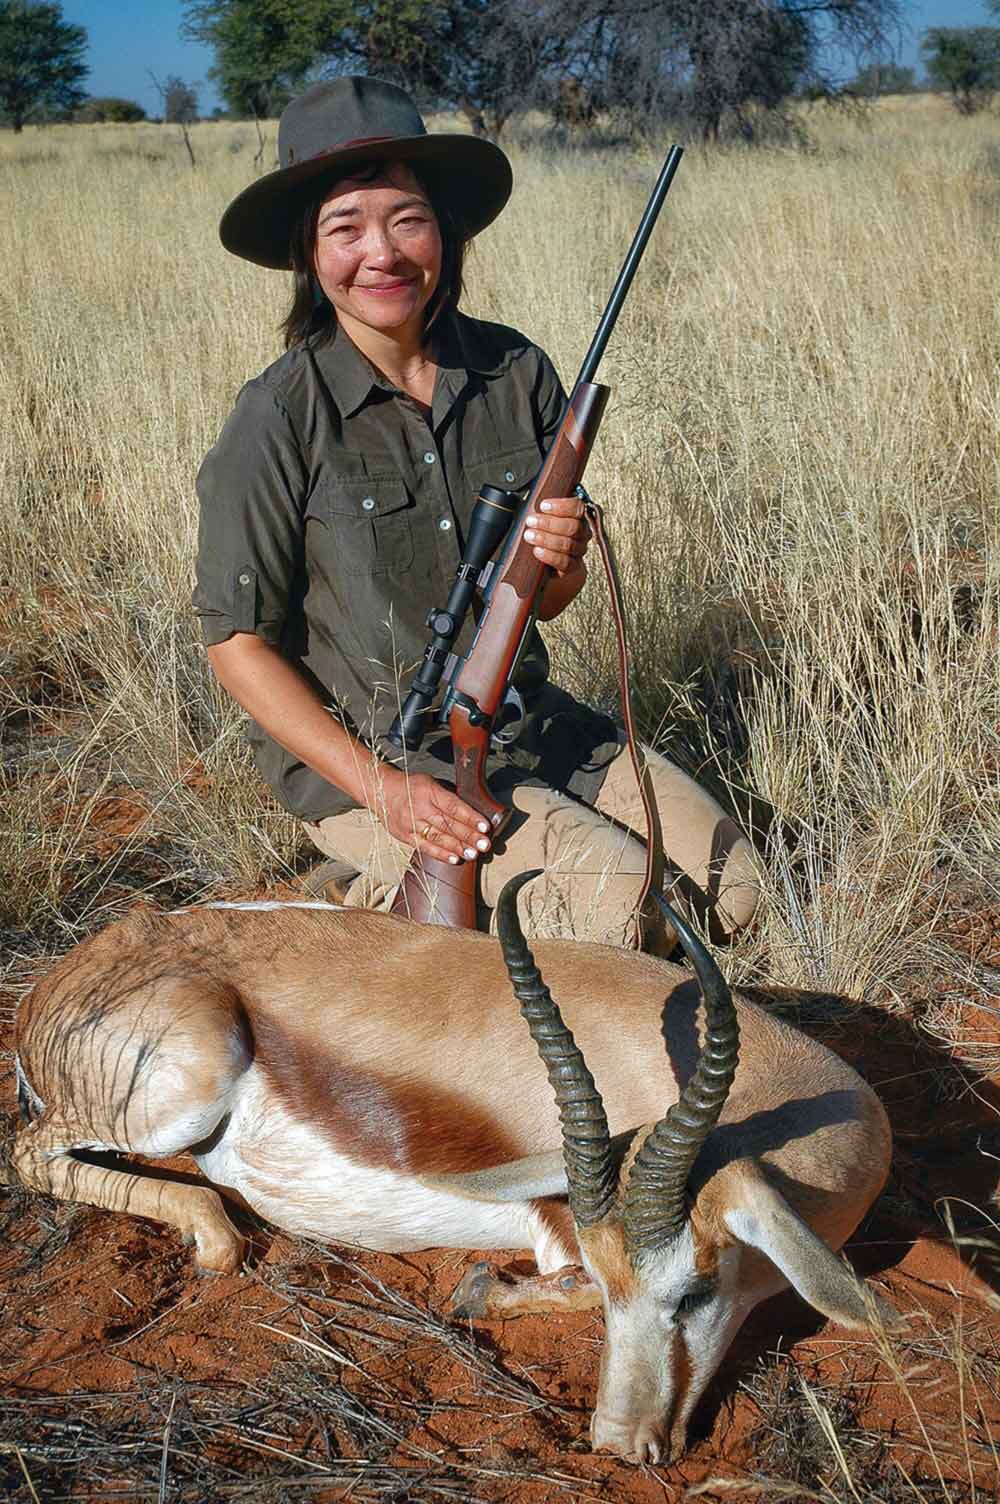 laurel holding antelope hunting afria